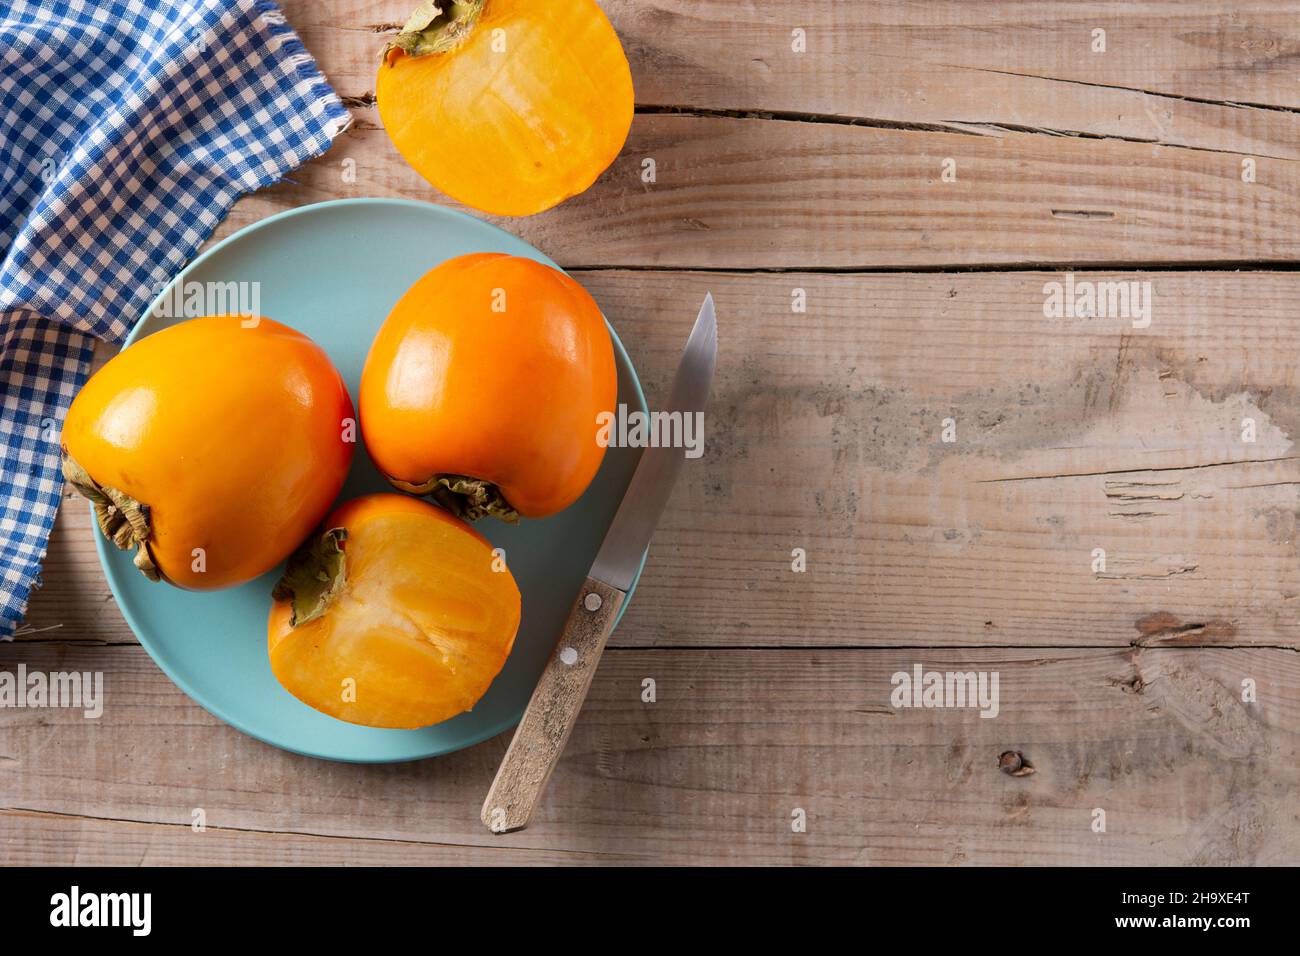 Fresh persimmon fruit on wooden table Stock Photo